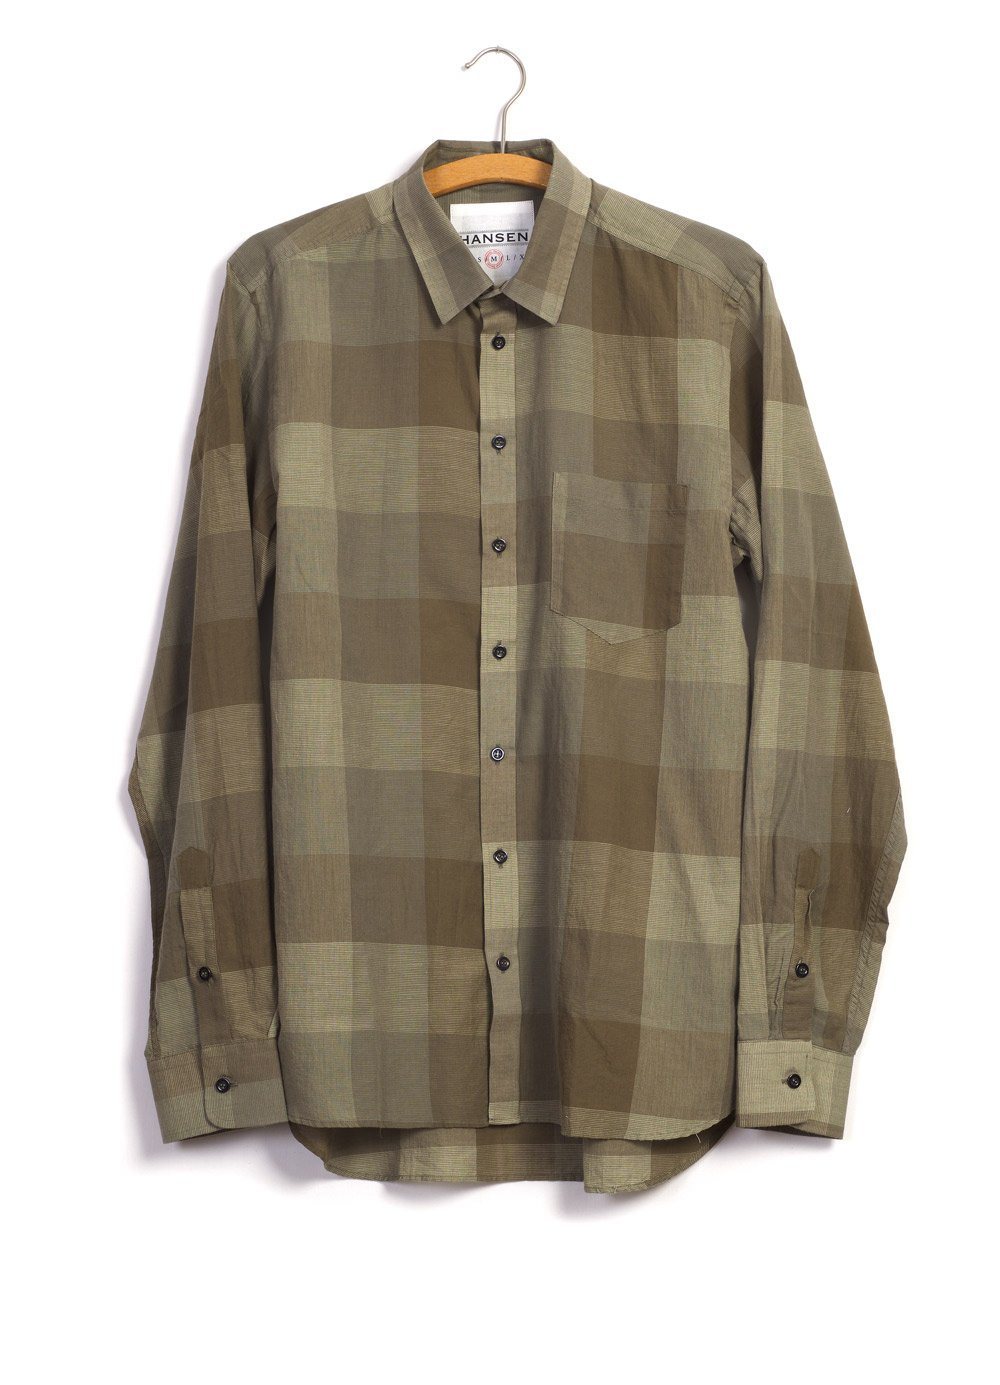 JESPER | Casual Chequered Shirt | Olivetree | €200 -HANSEN Garments- HANSEN Garments